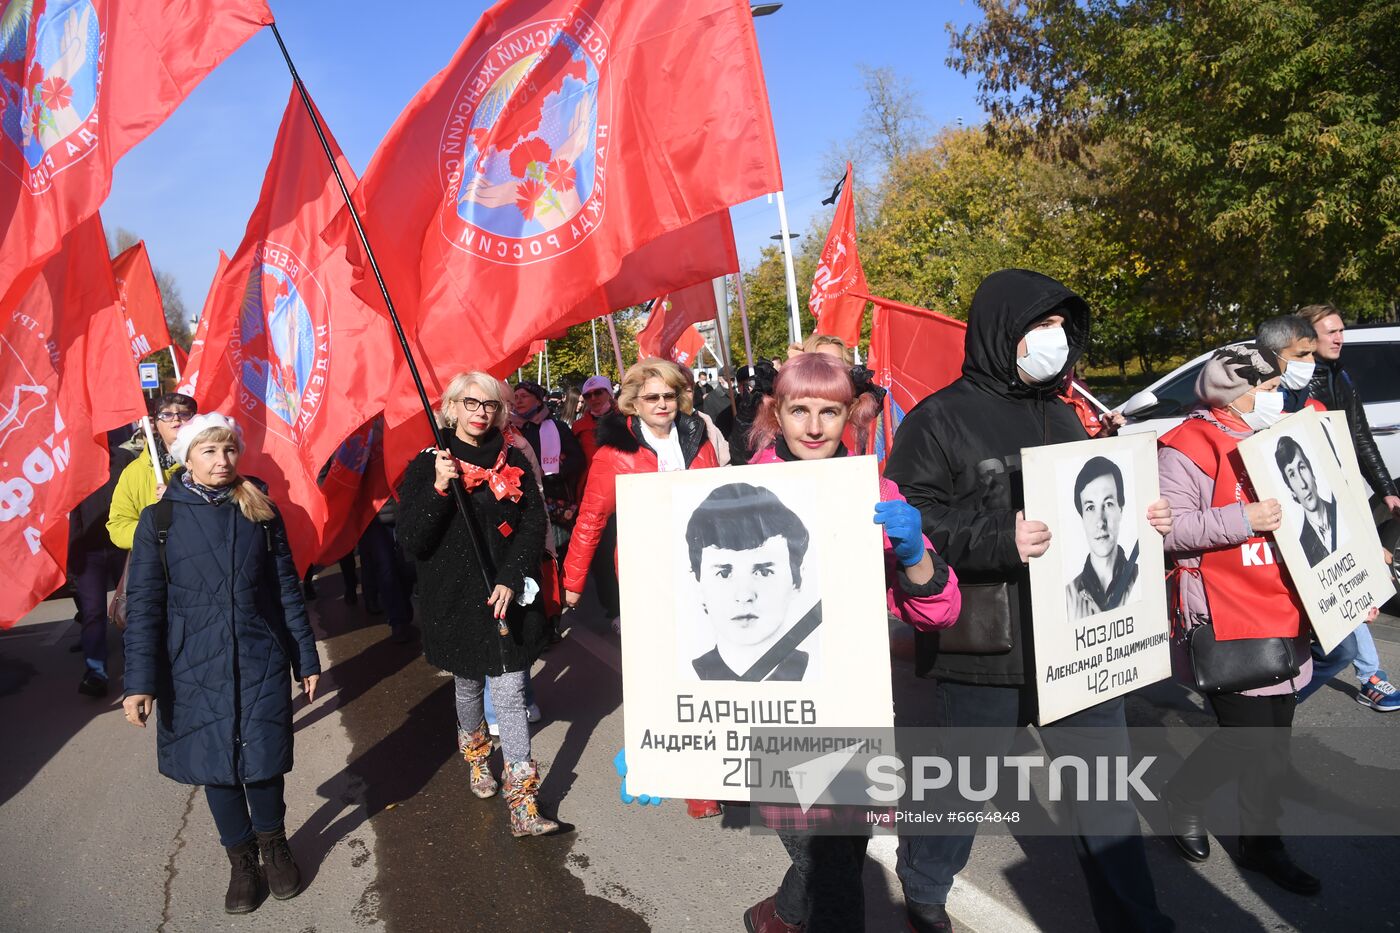 Russia Commemoration Rally